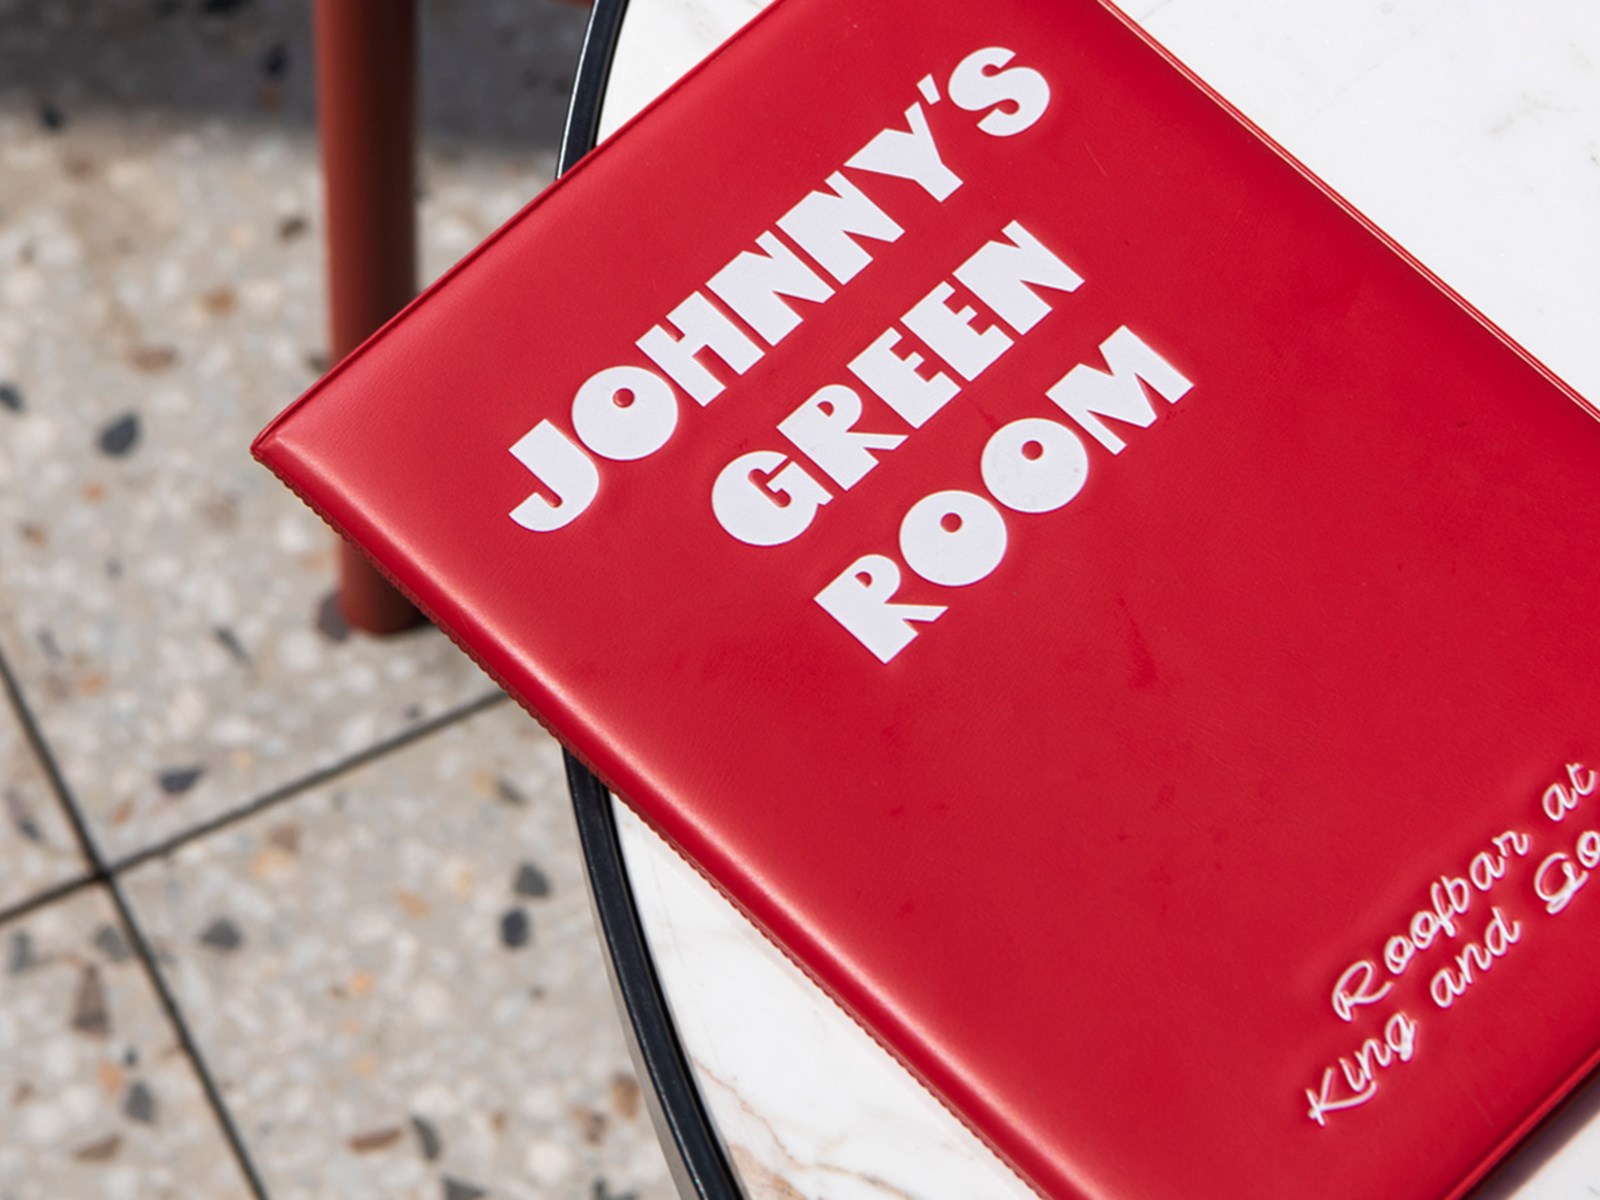 Johnnys Green Room Mel R Supplied 7279 1600x900 ?ts=20190206540200